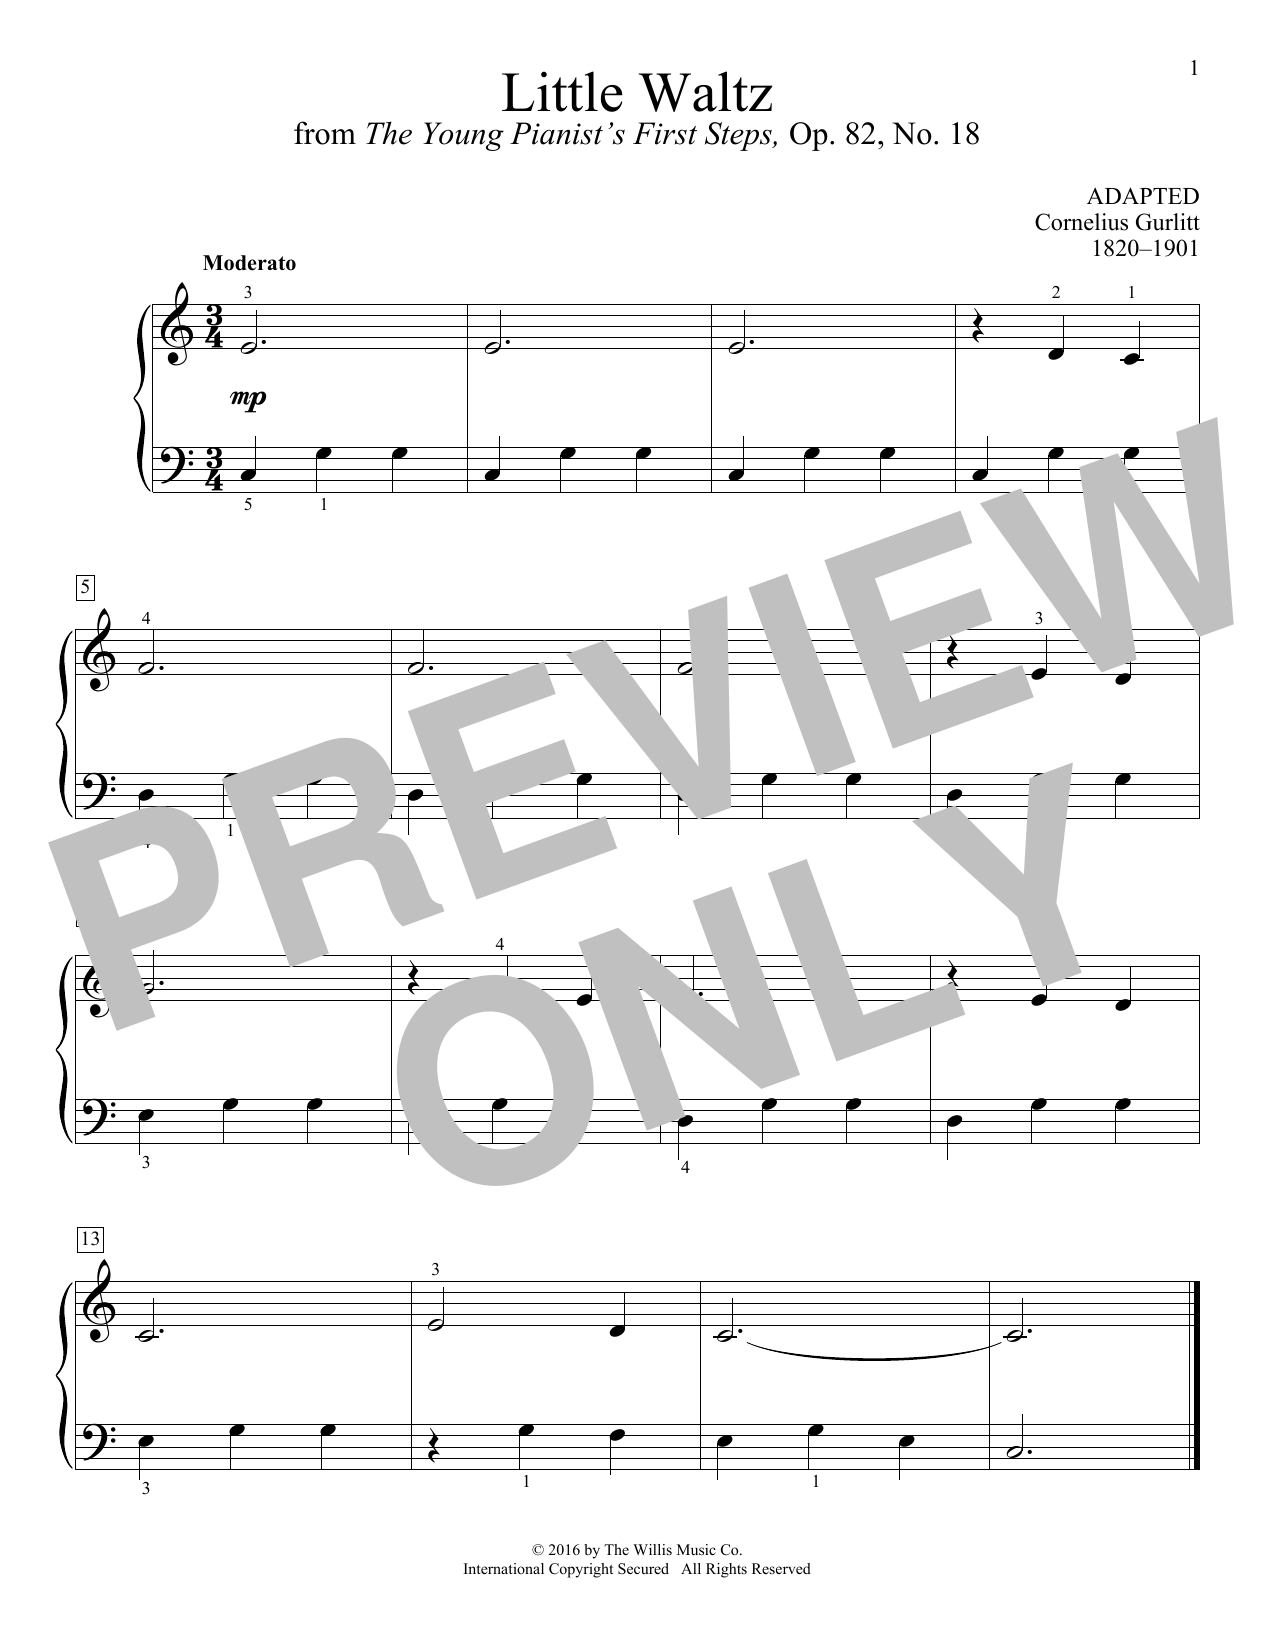 Download Cornelius Gurlitt Little Waltz Sheet Music